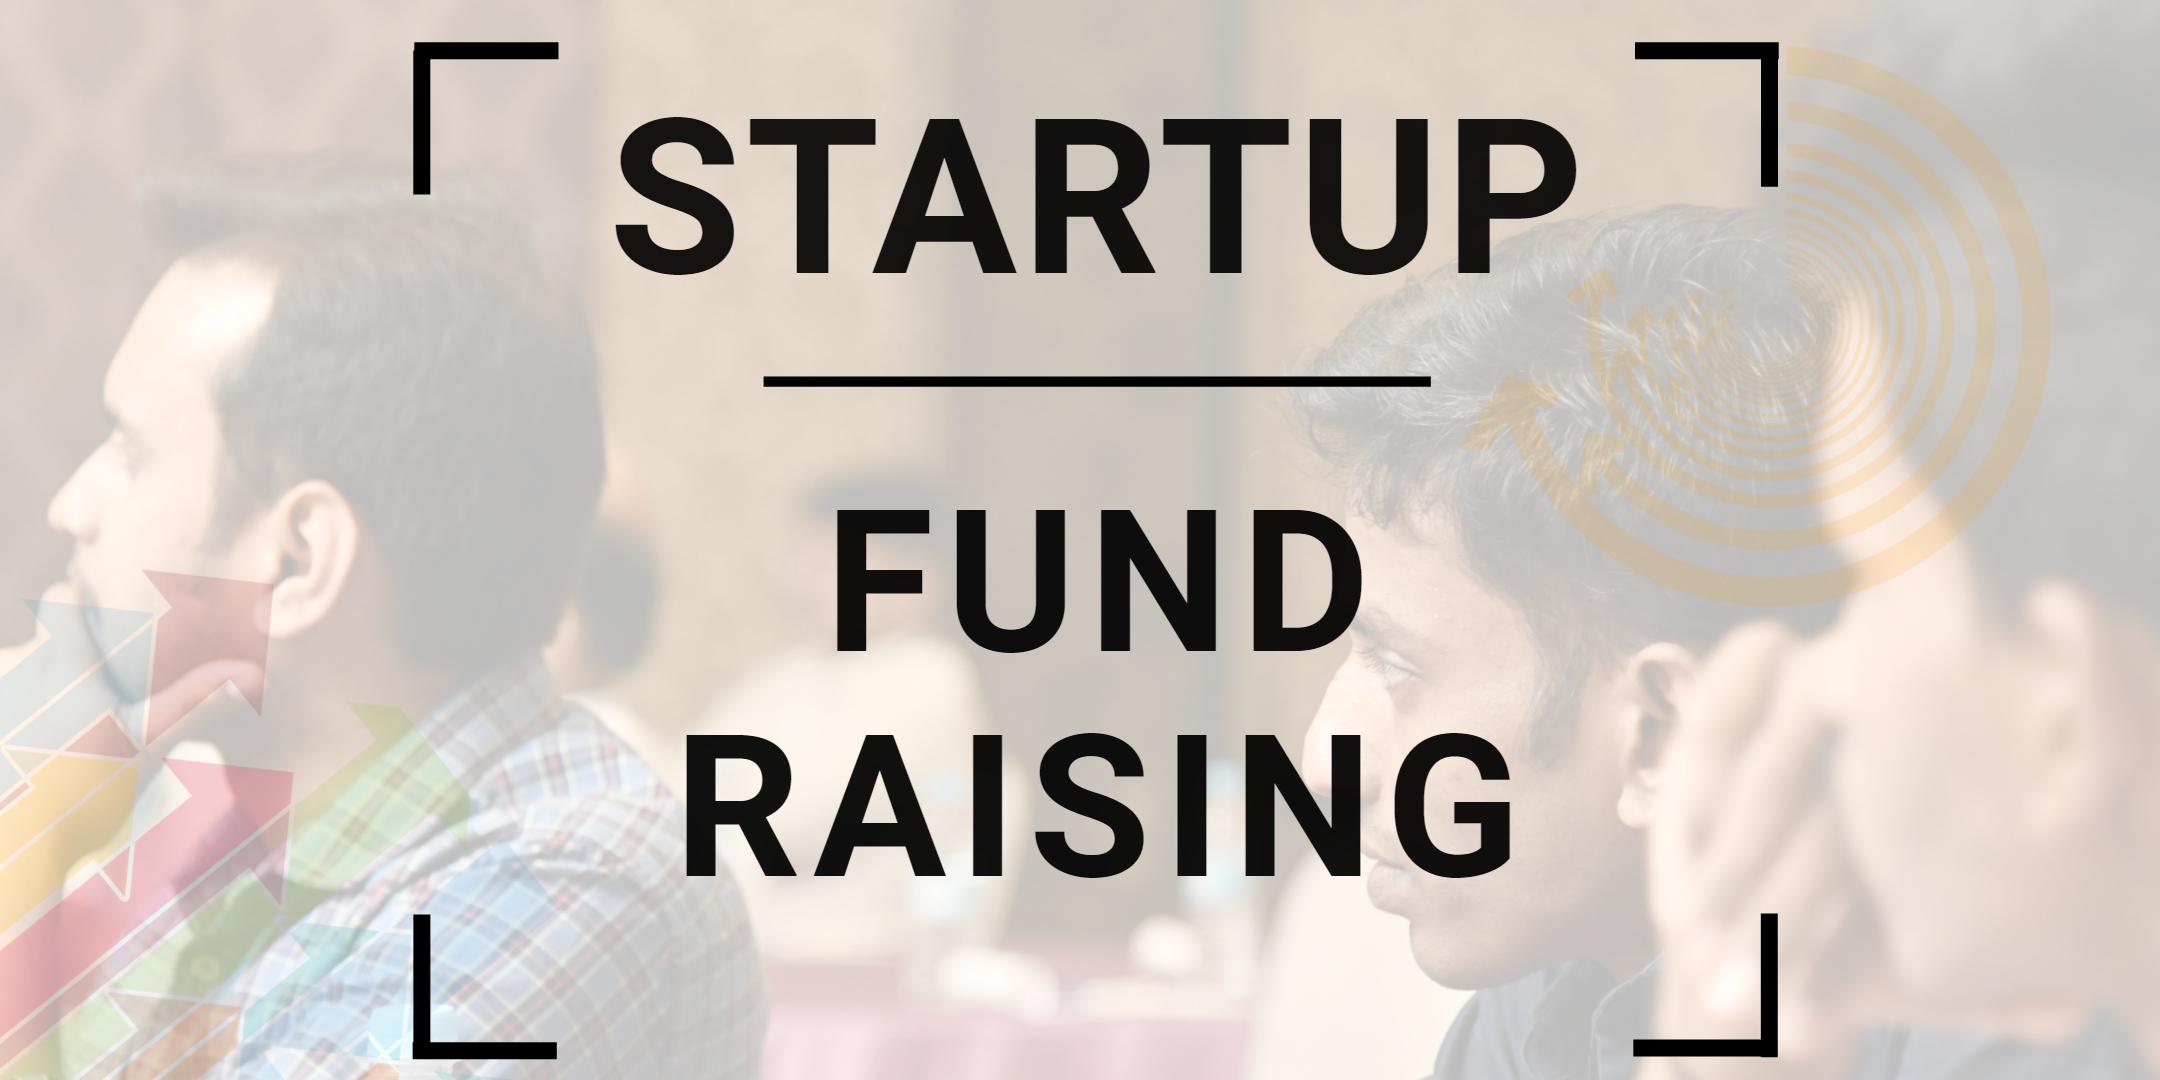 Fund Raising - Startup Business